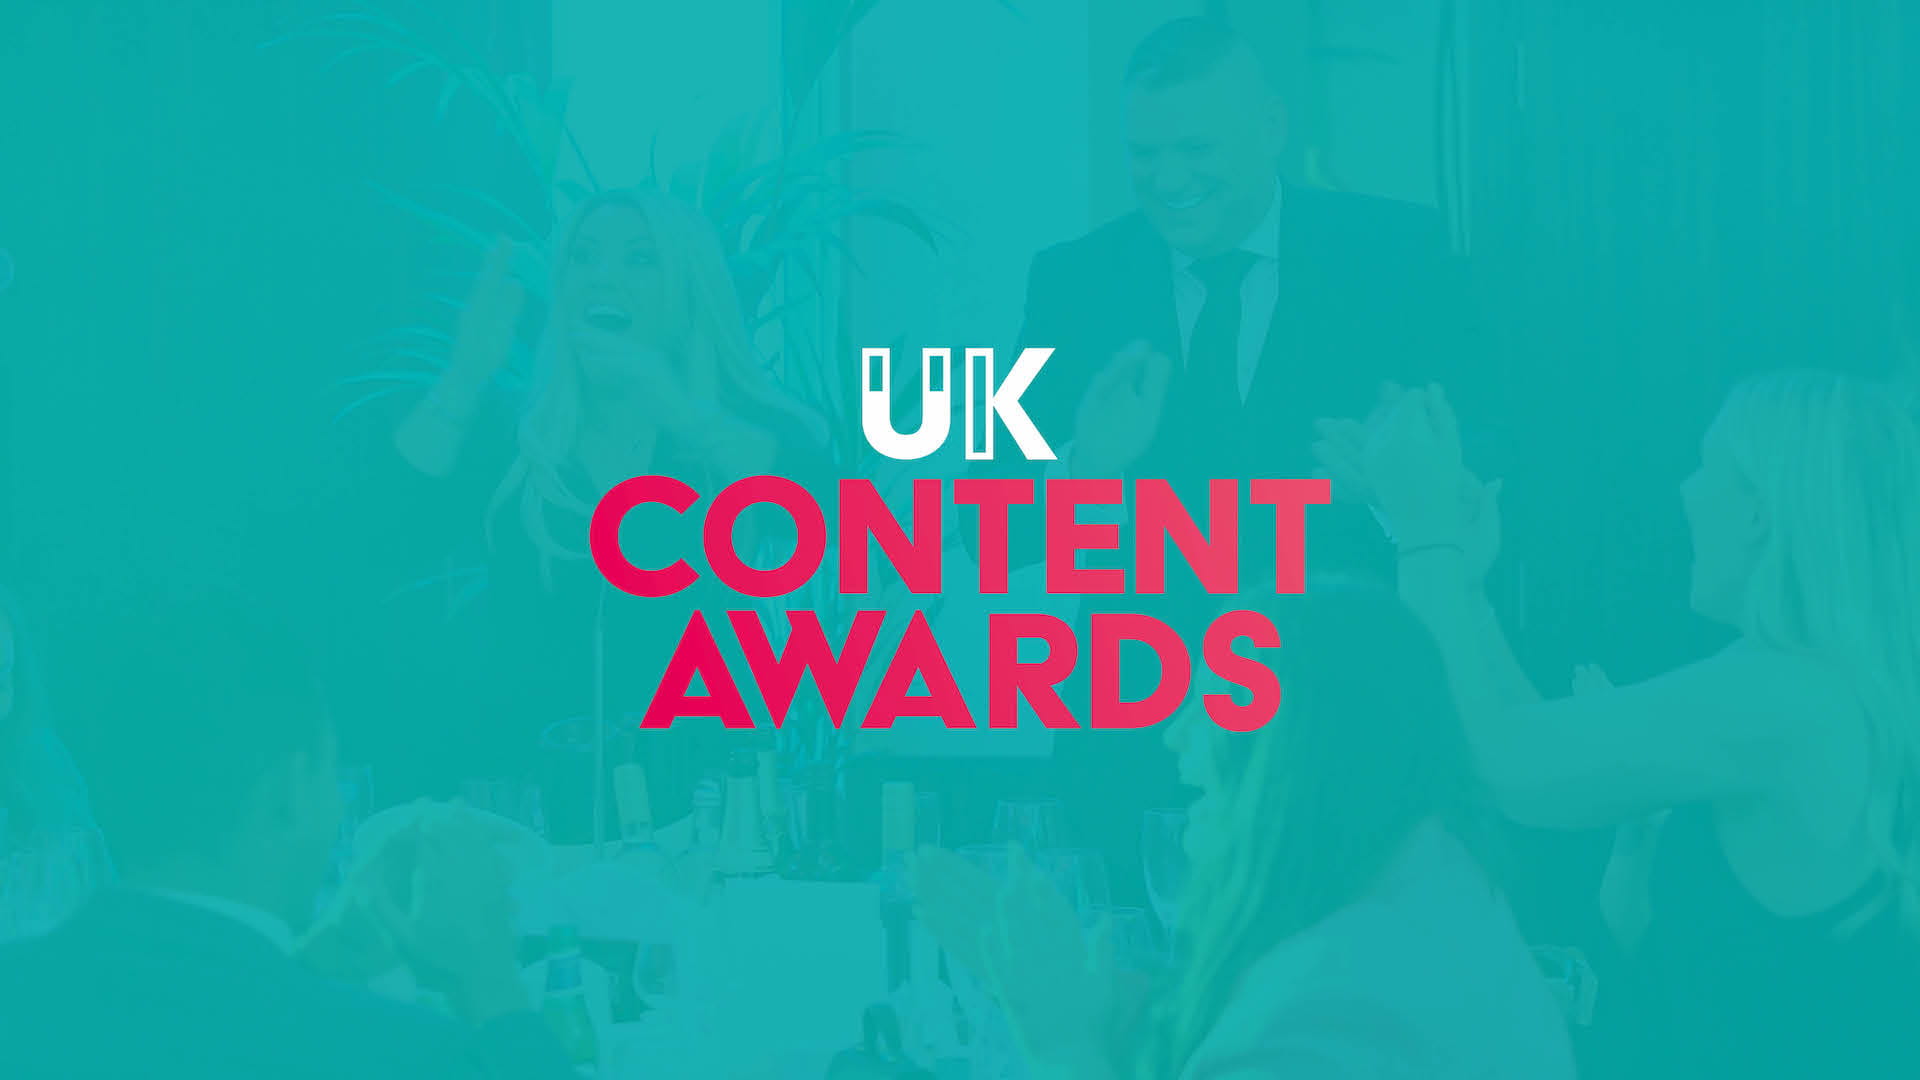 UK Content Awards logo.